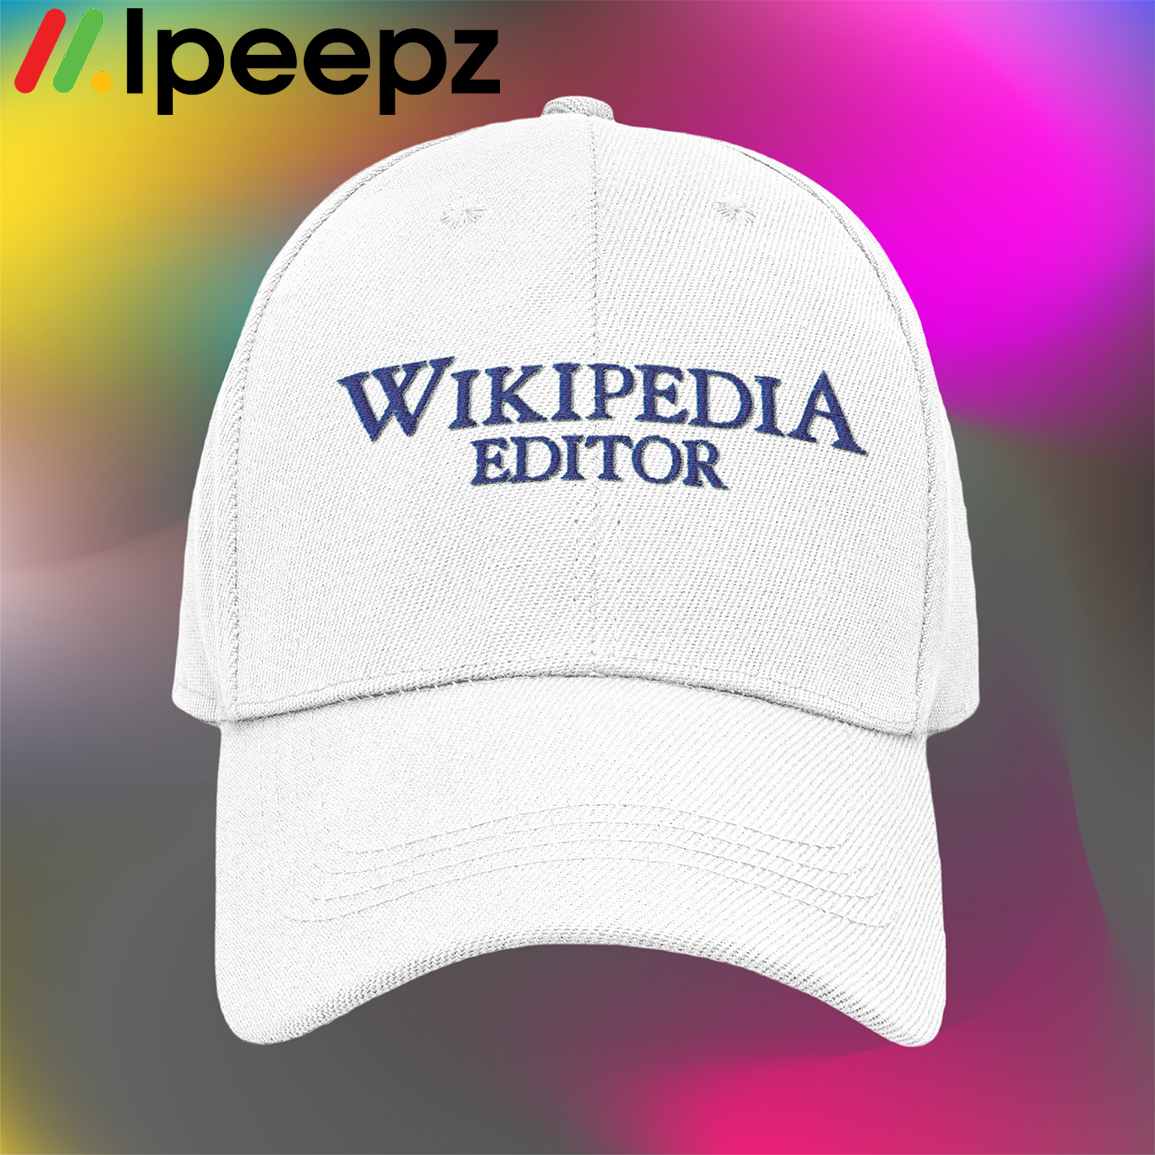 Baseball cap - Wikipedia